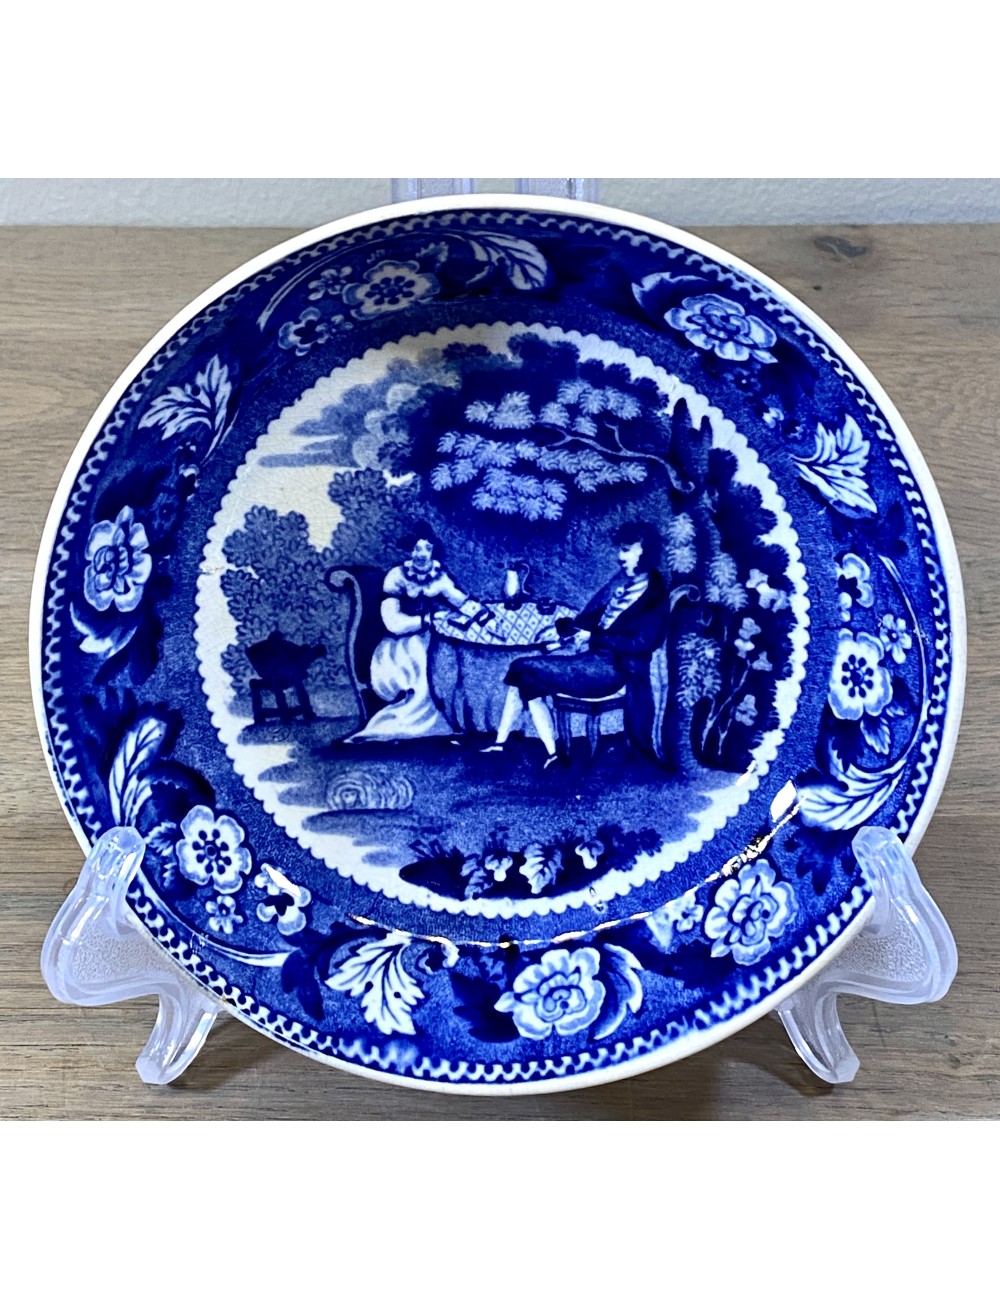 Schoteltje / Onderschotel - WS&Co (William Smith) Stafford Pottery - No.3 (blindmerk Wedgwood) - décor in blauw transferware